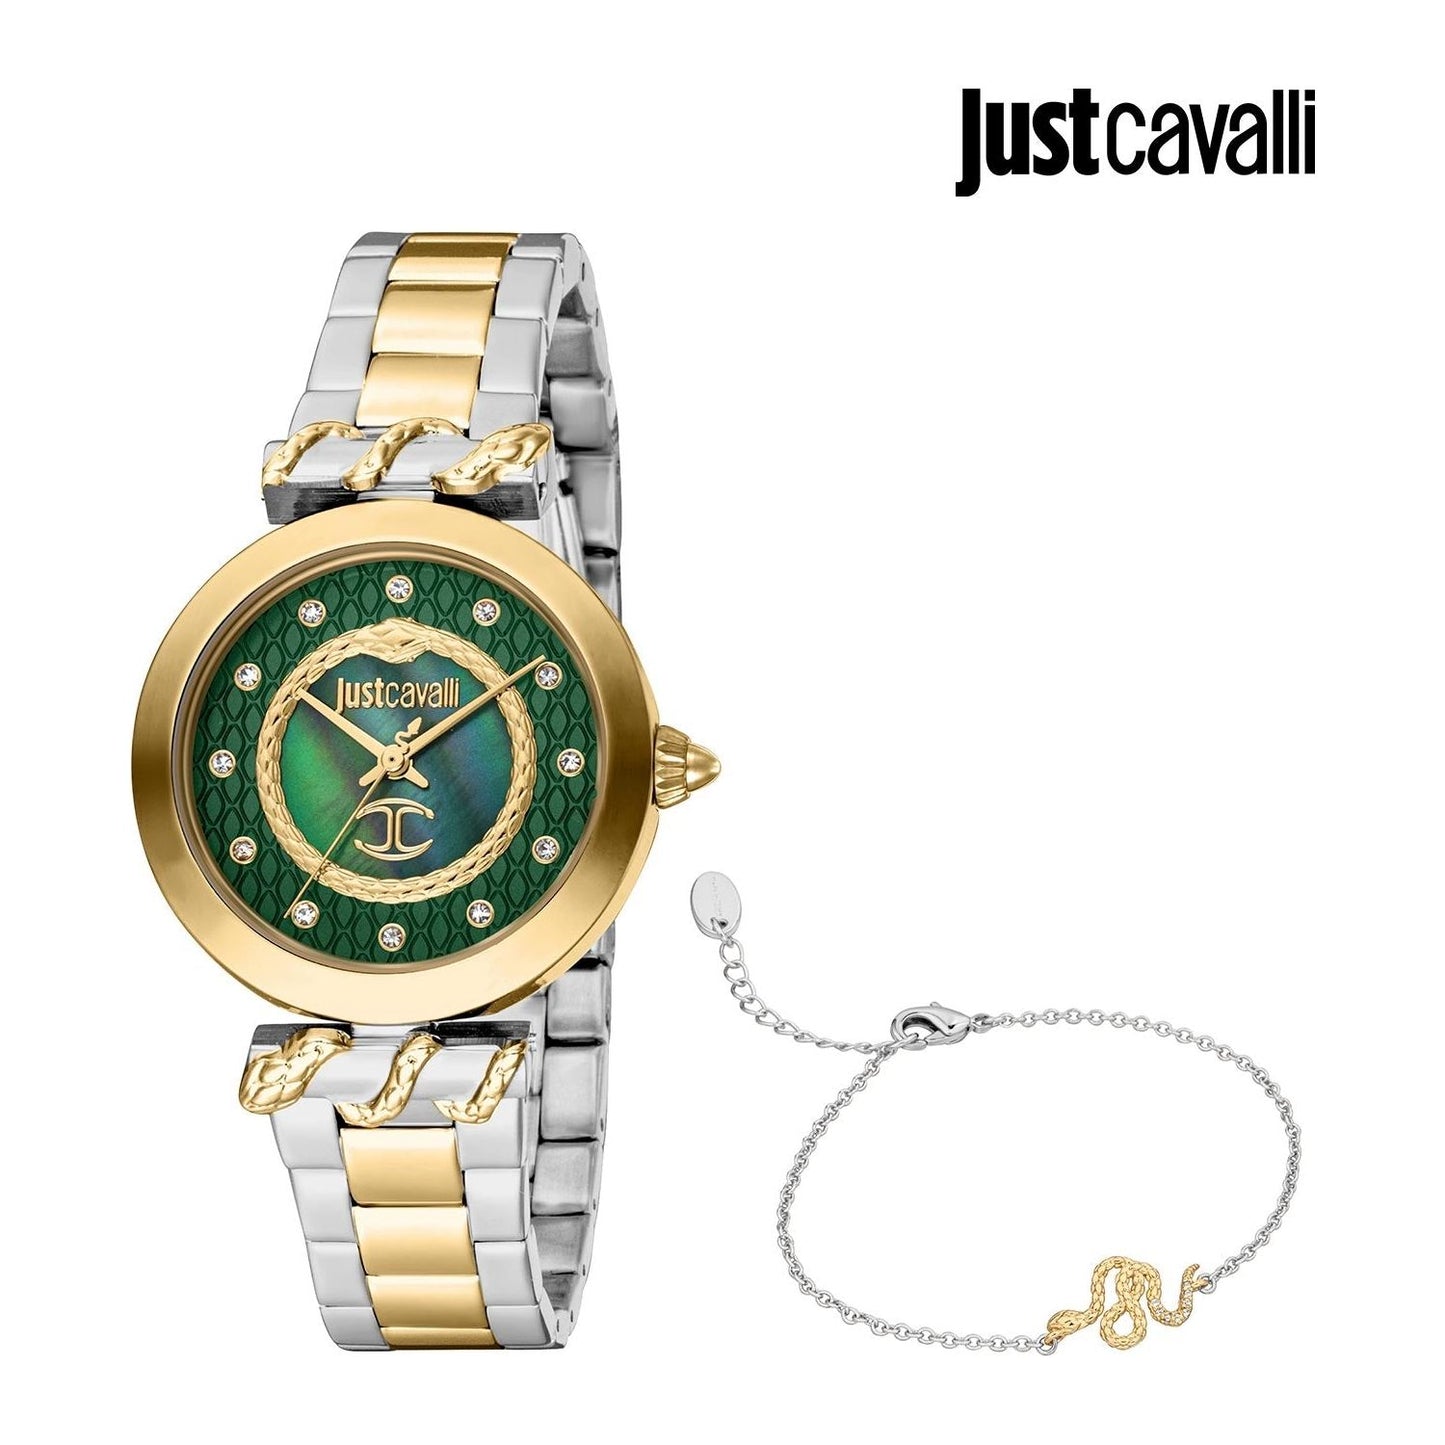 JUST CAVALLI TIME JUST CAVALLI Mod. ANIMALIER - Special Pack + Bracelet WATCHES just-cavalli-mod-animalier-special-pack-bracelet-1 JC1L257M0065.jpg